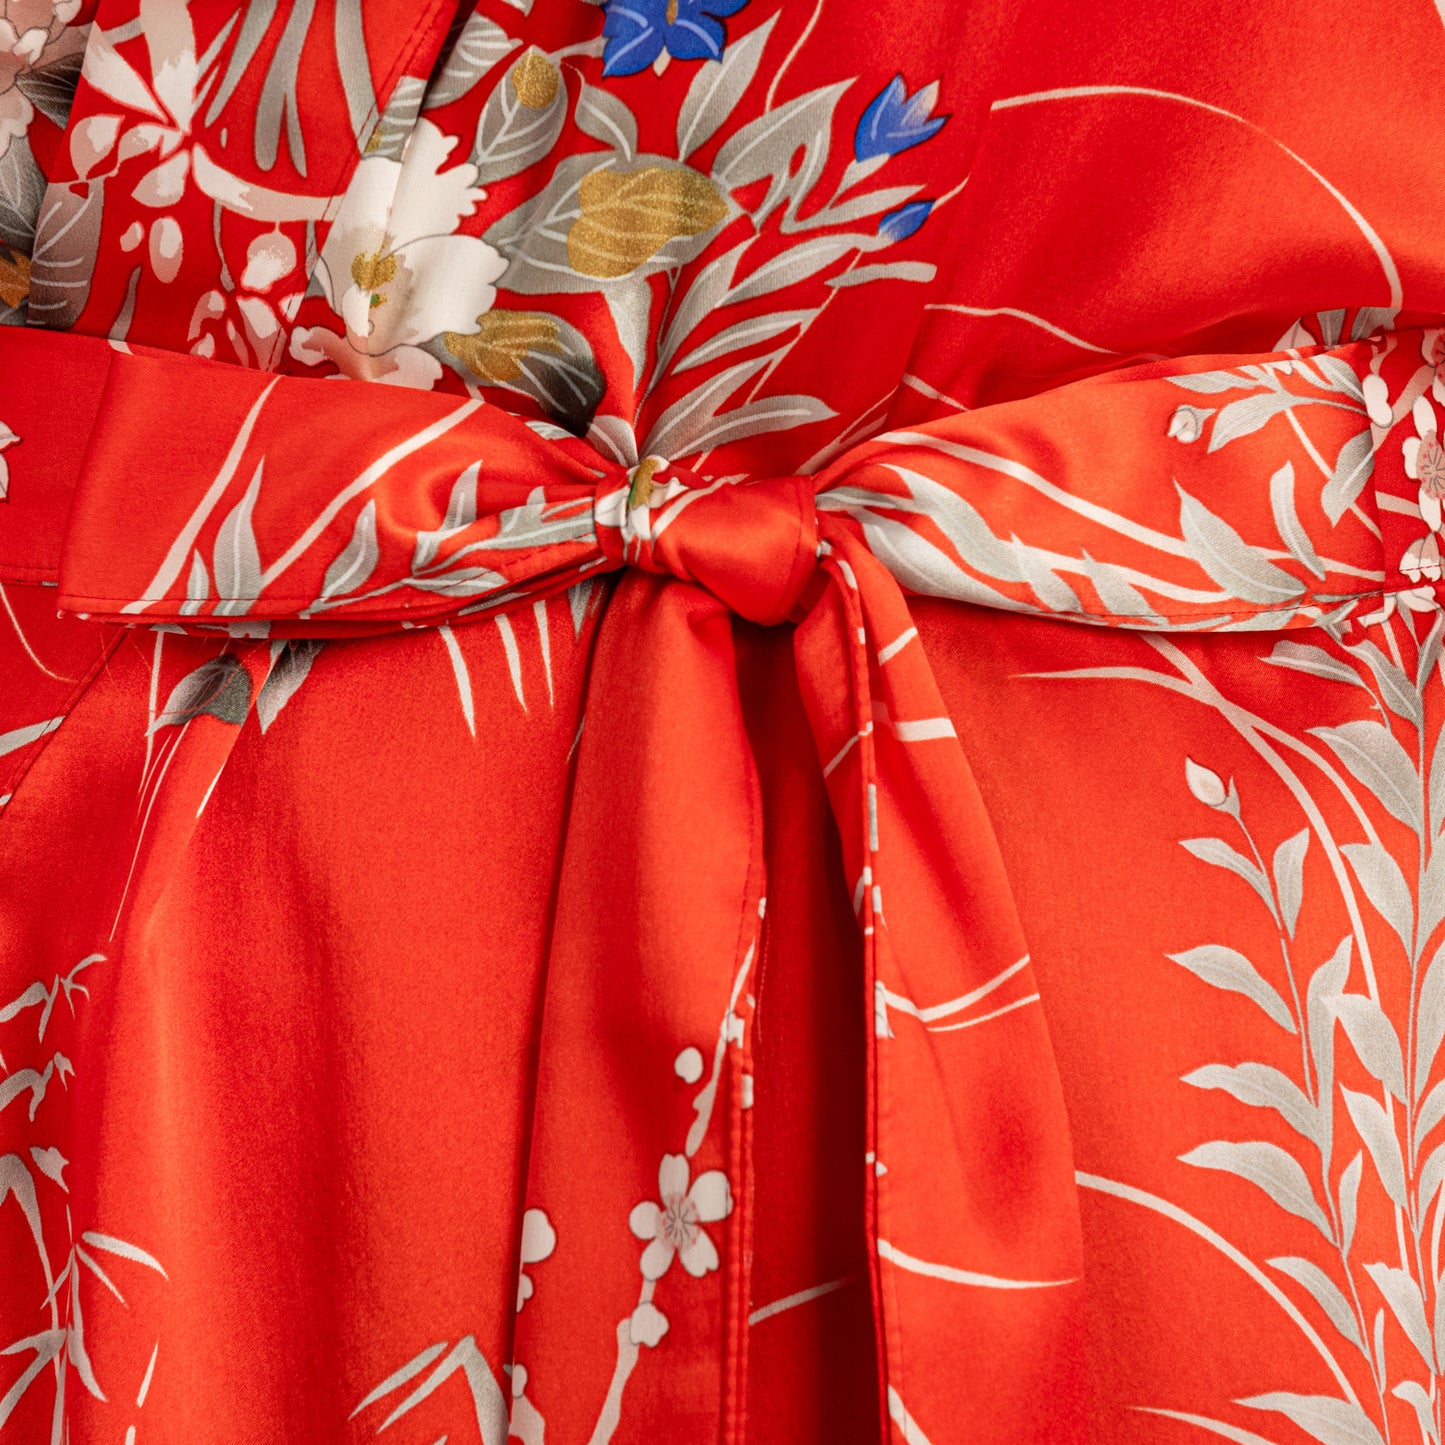 Japanese Silk Kimono Floral Print Long Red